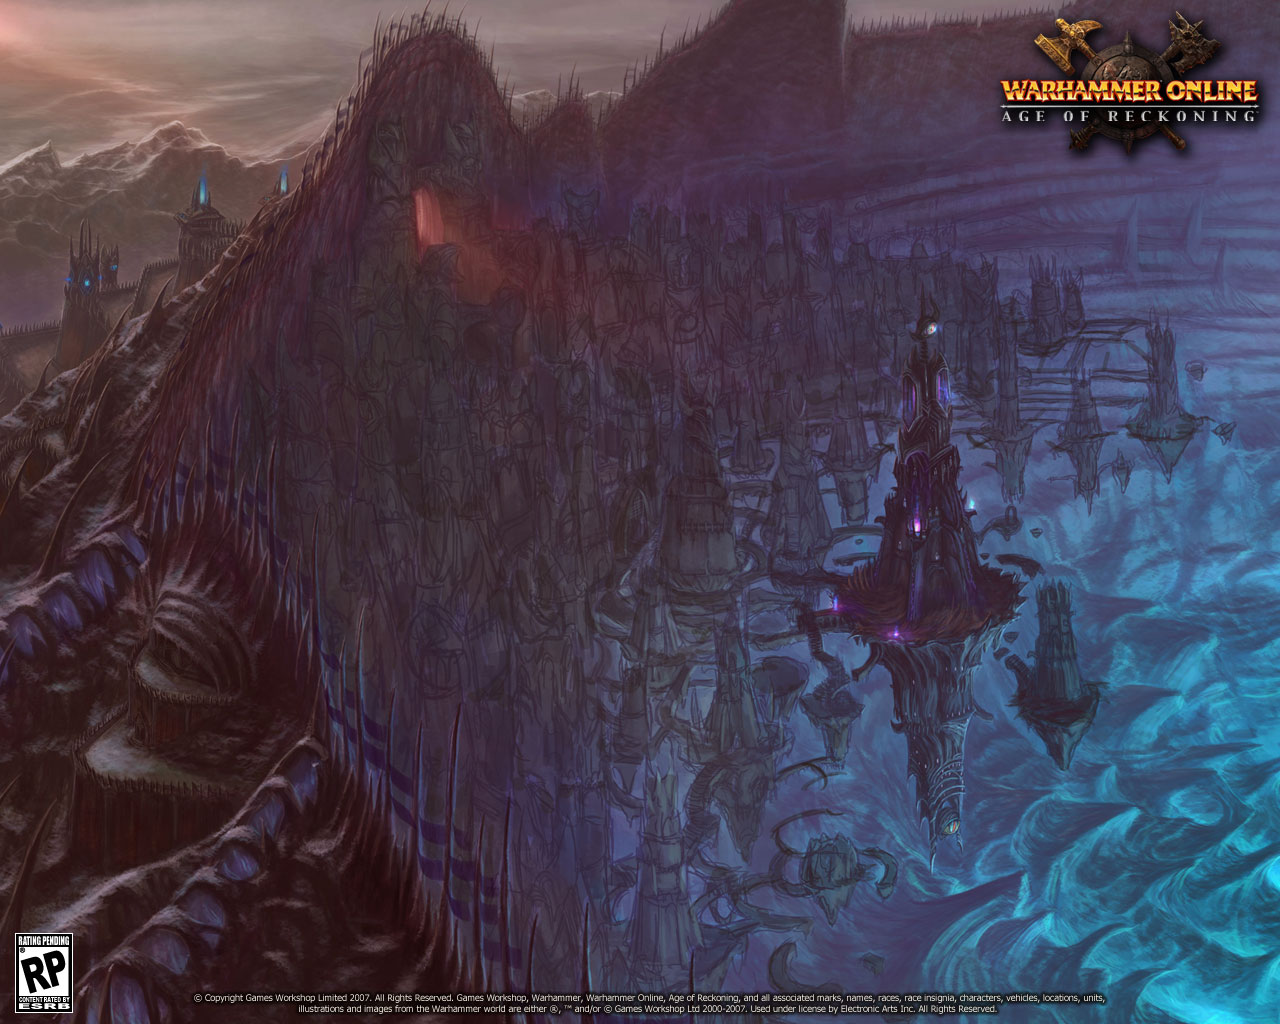 Warhammer Online Age Of Reckoning 1280x1024